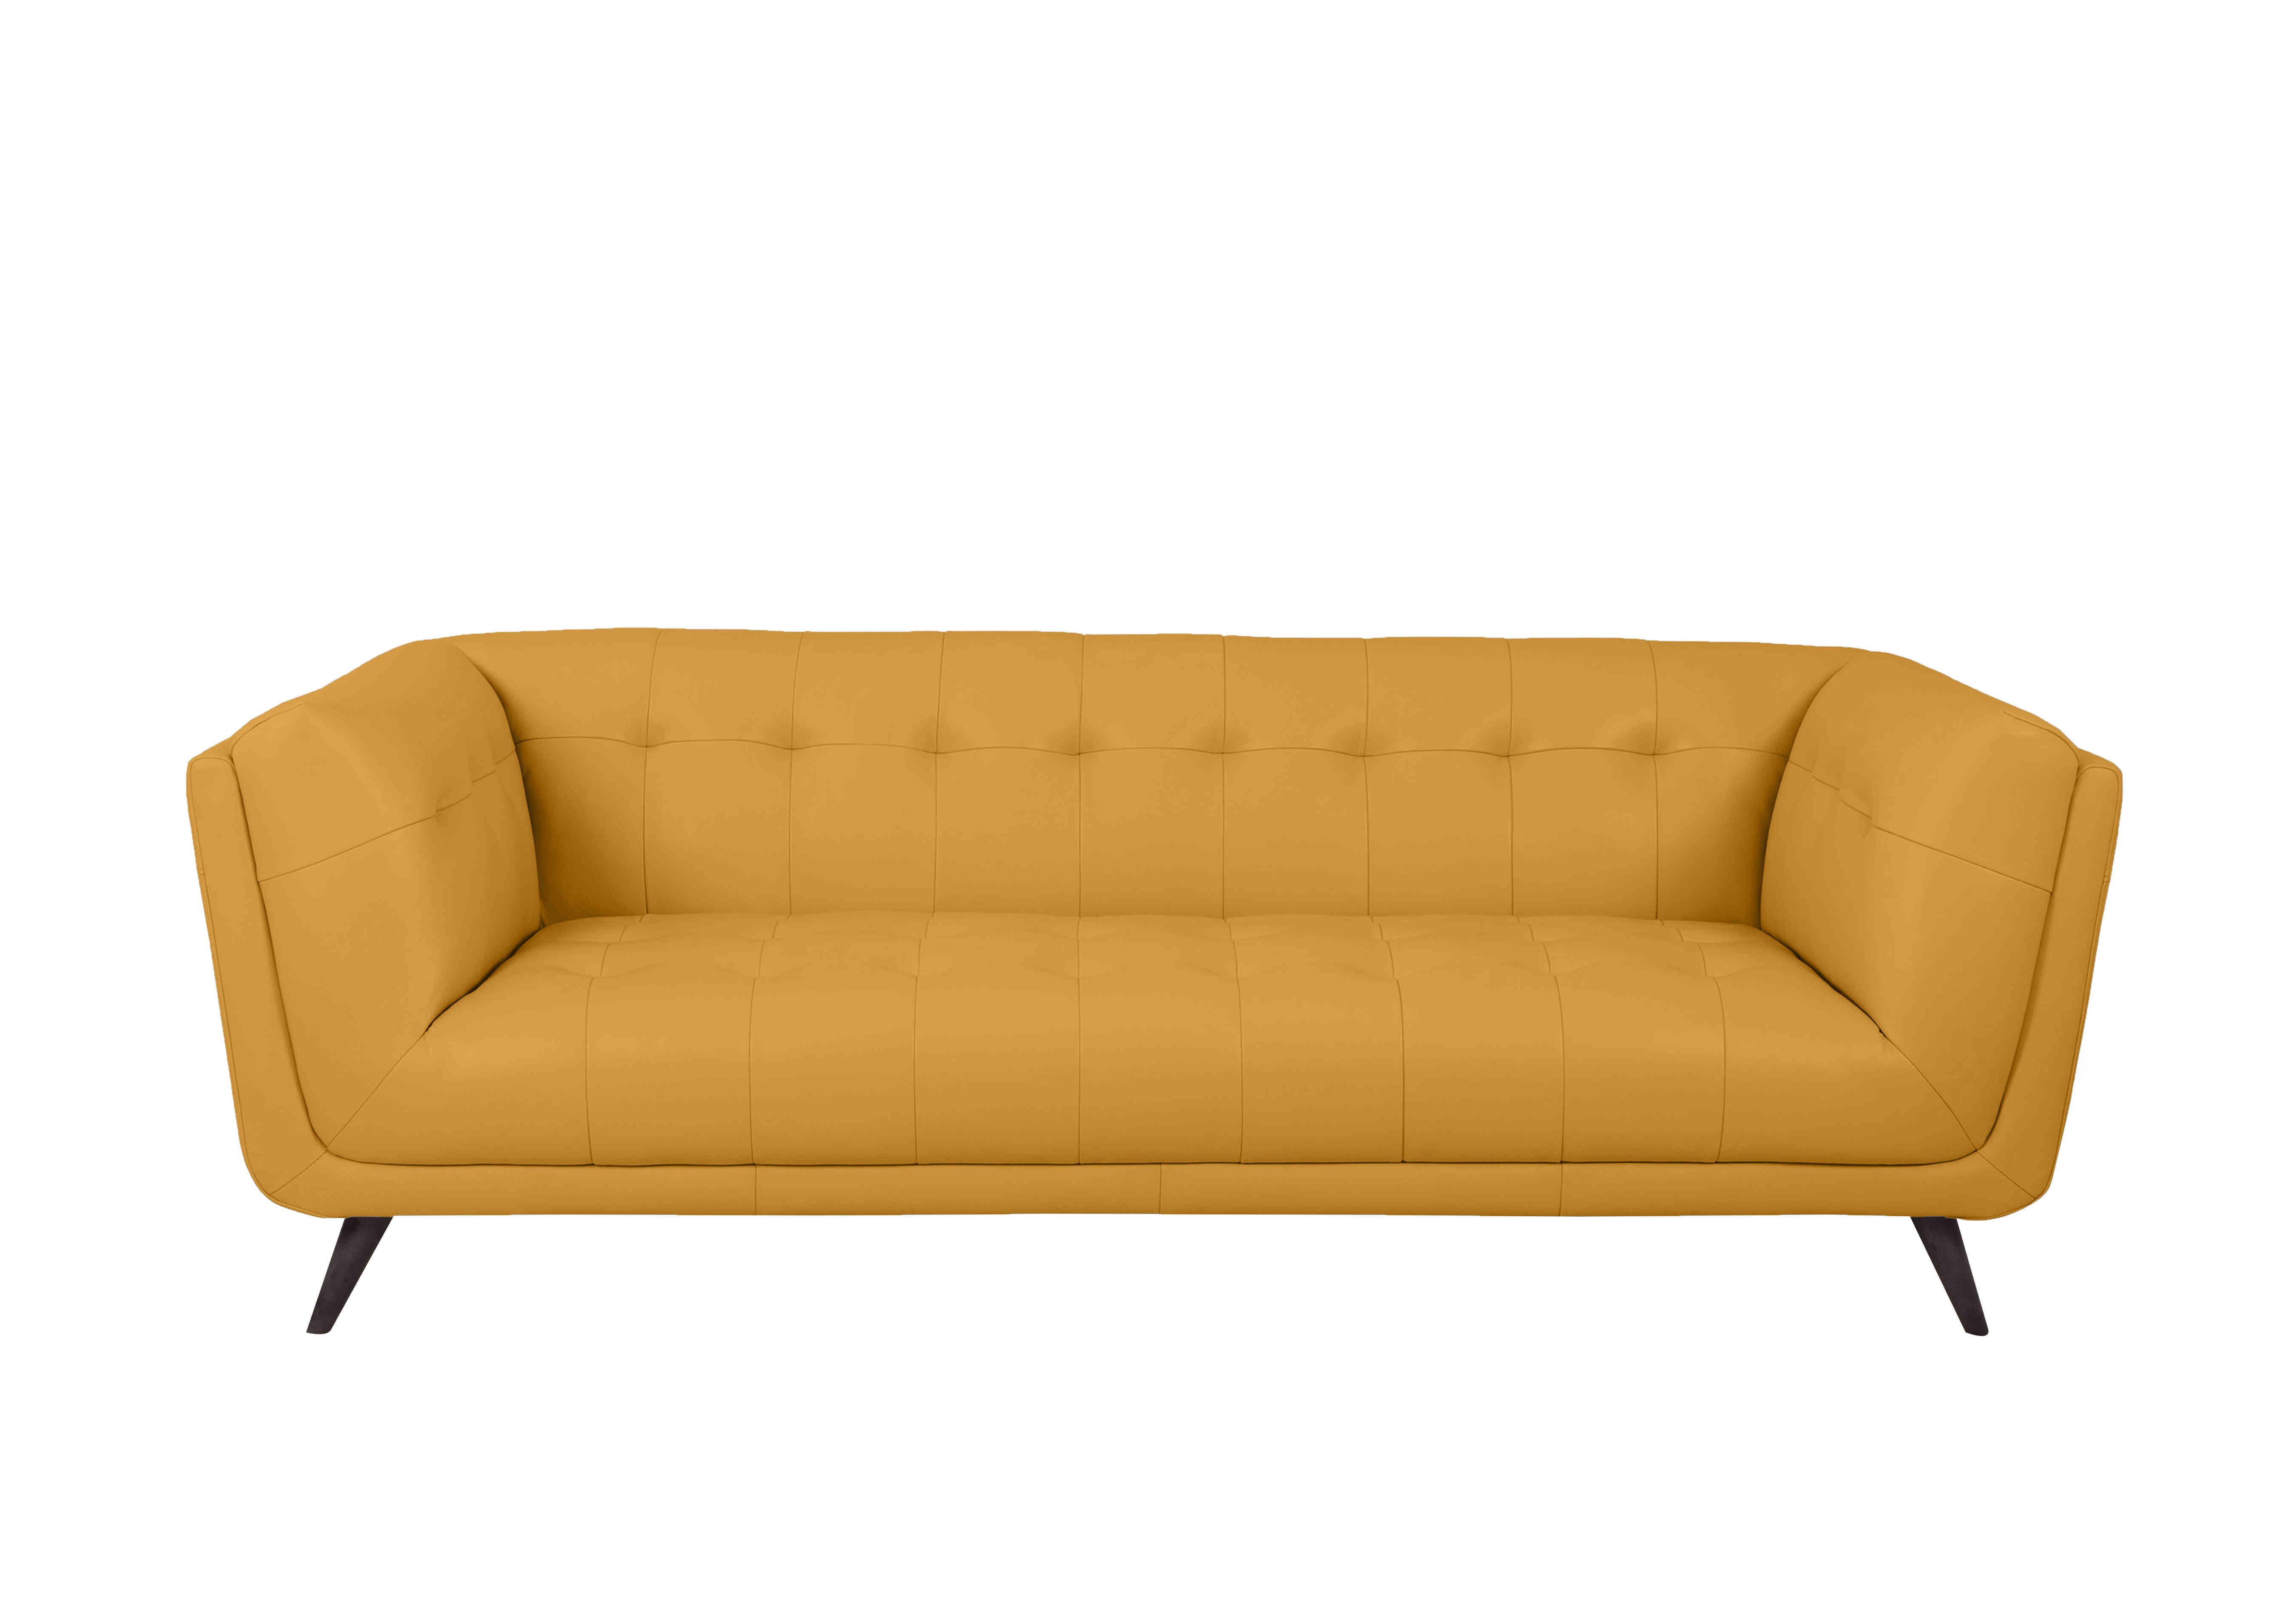 Rene 3 Seater Leather Sofa in Florida Sunburst on Furniture Village